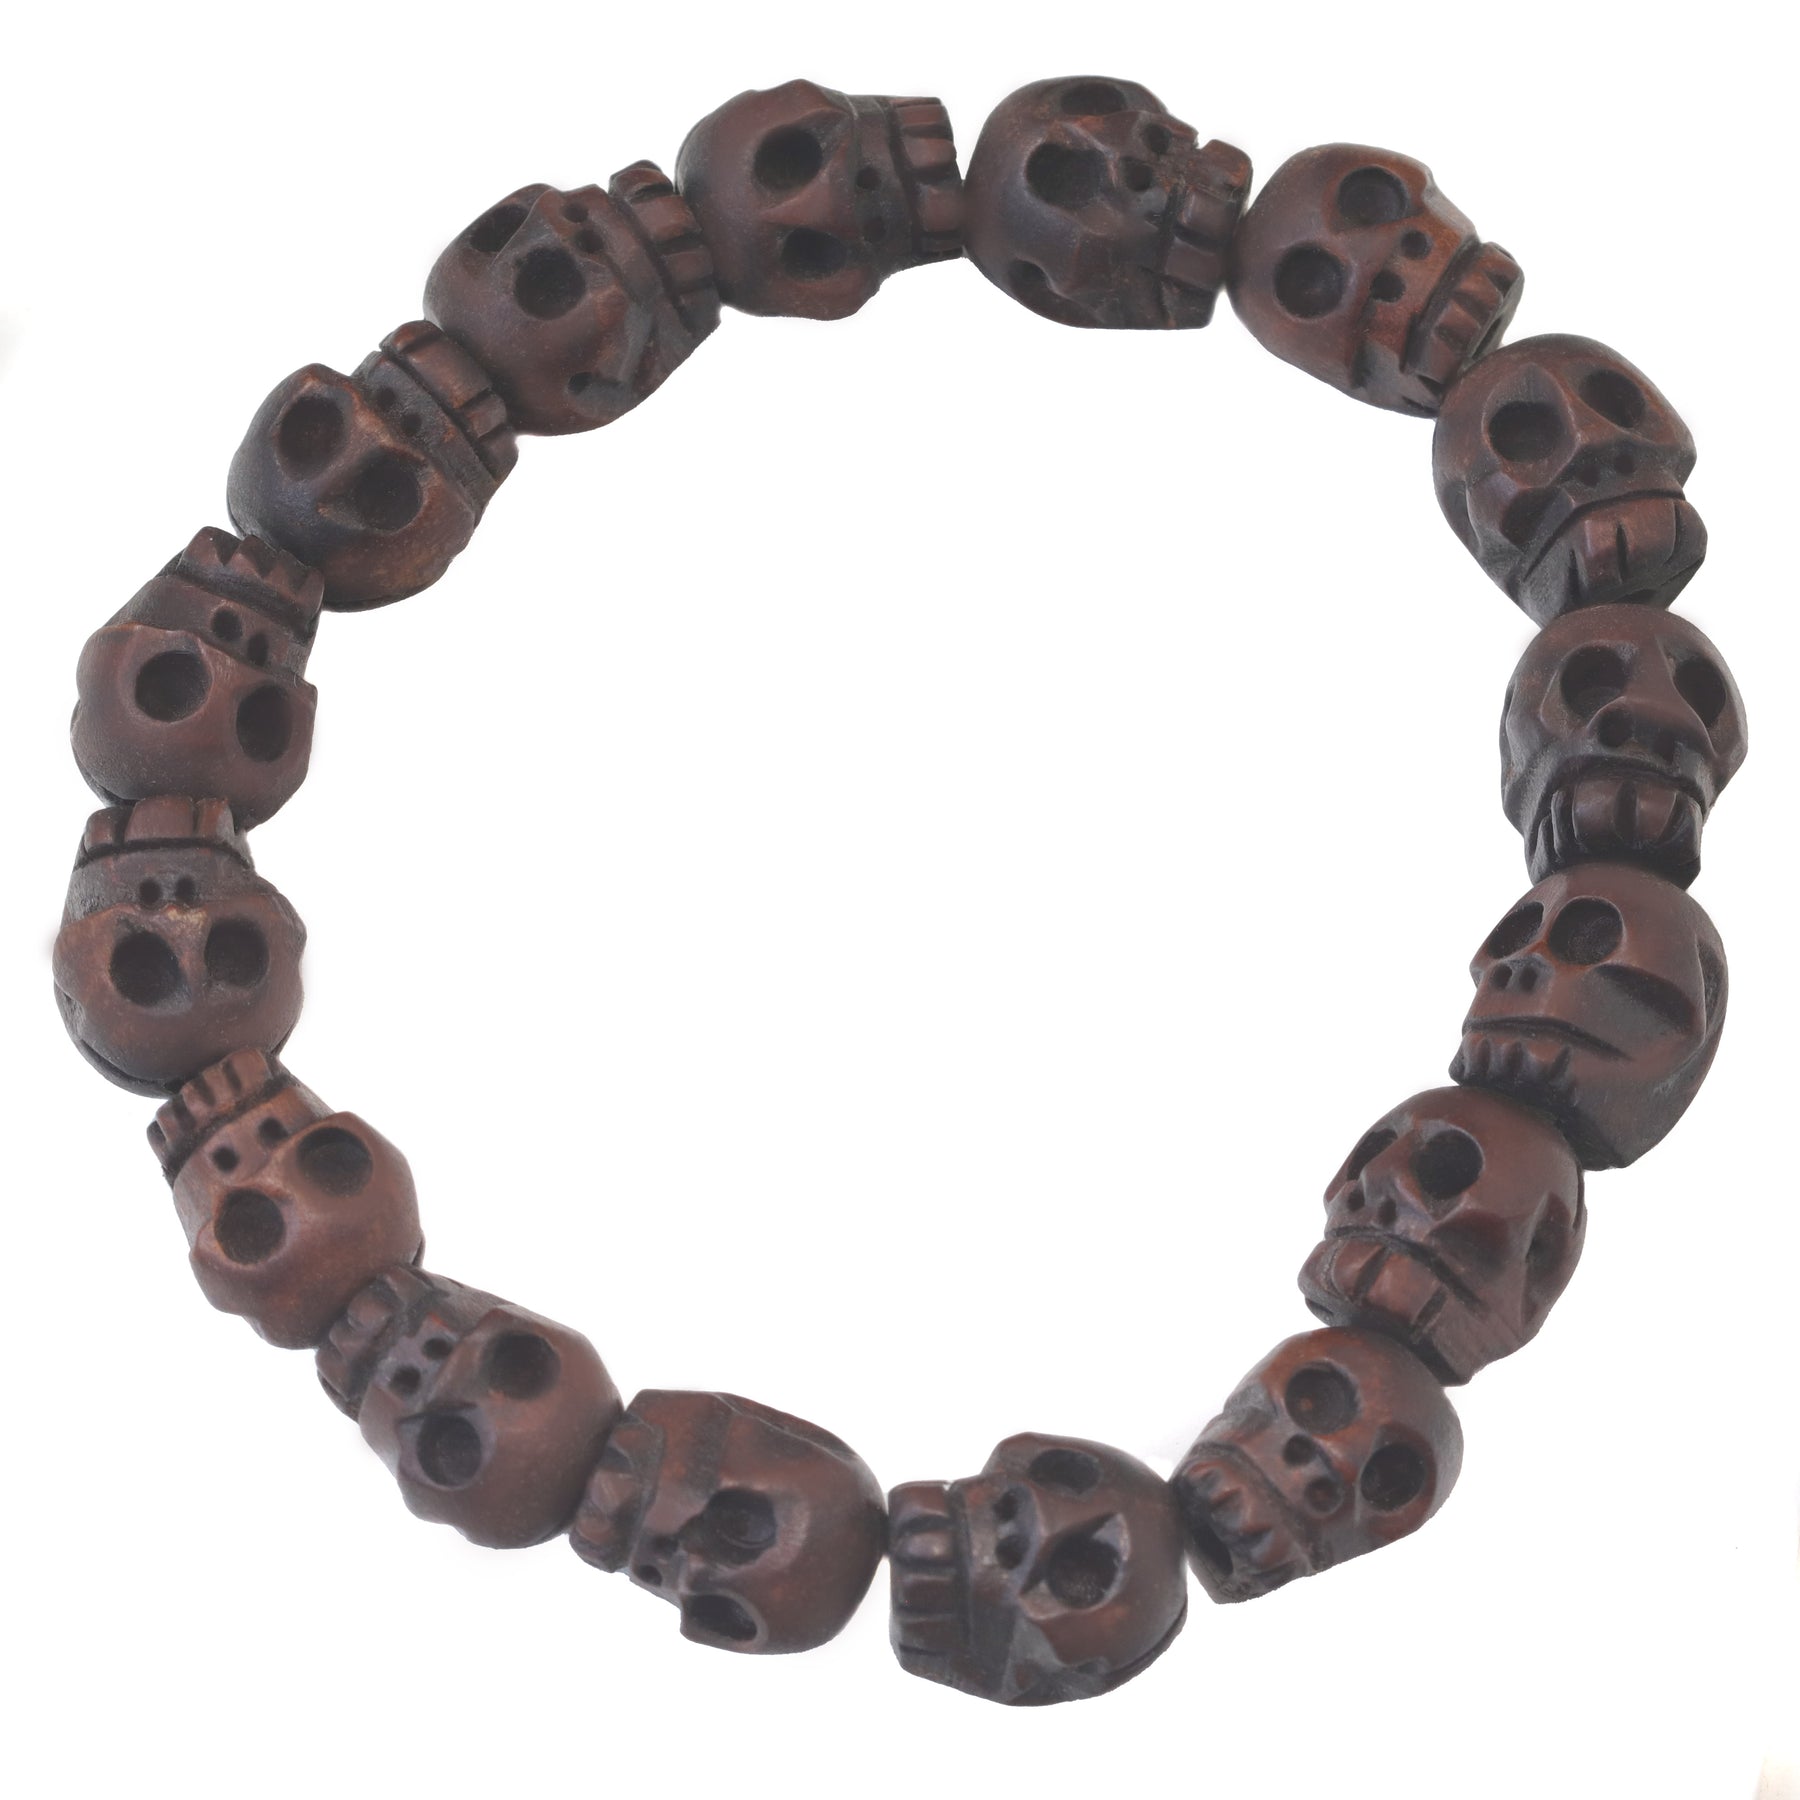 Amazon.com: Spyglass Designs Men's Skull Bracelet Brown Wooden Carved Mala  Beads Man's Male Stretchy Adjustable, 8